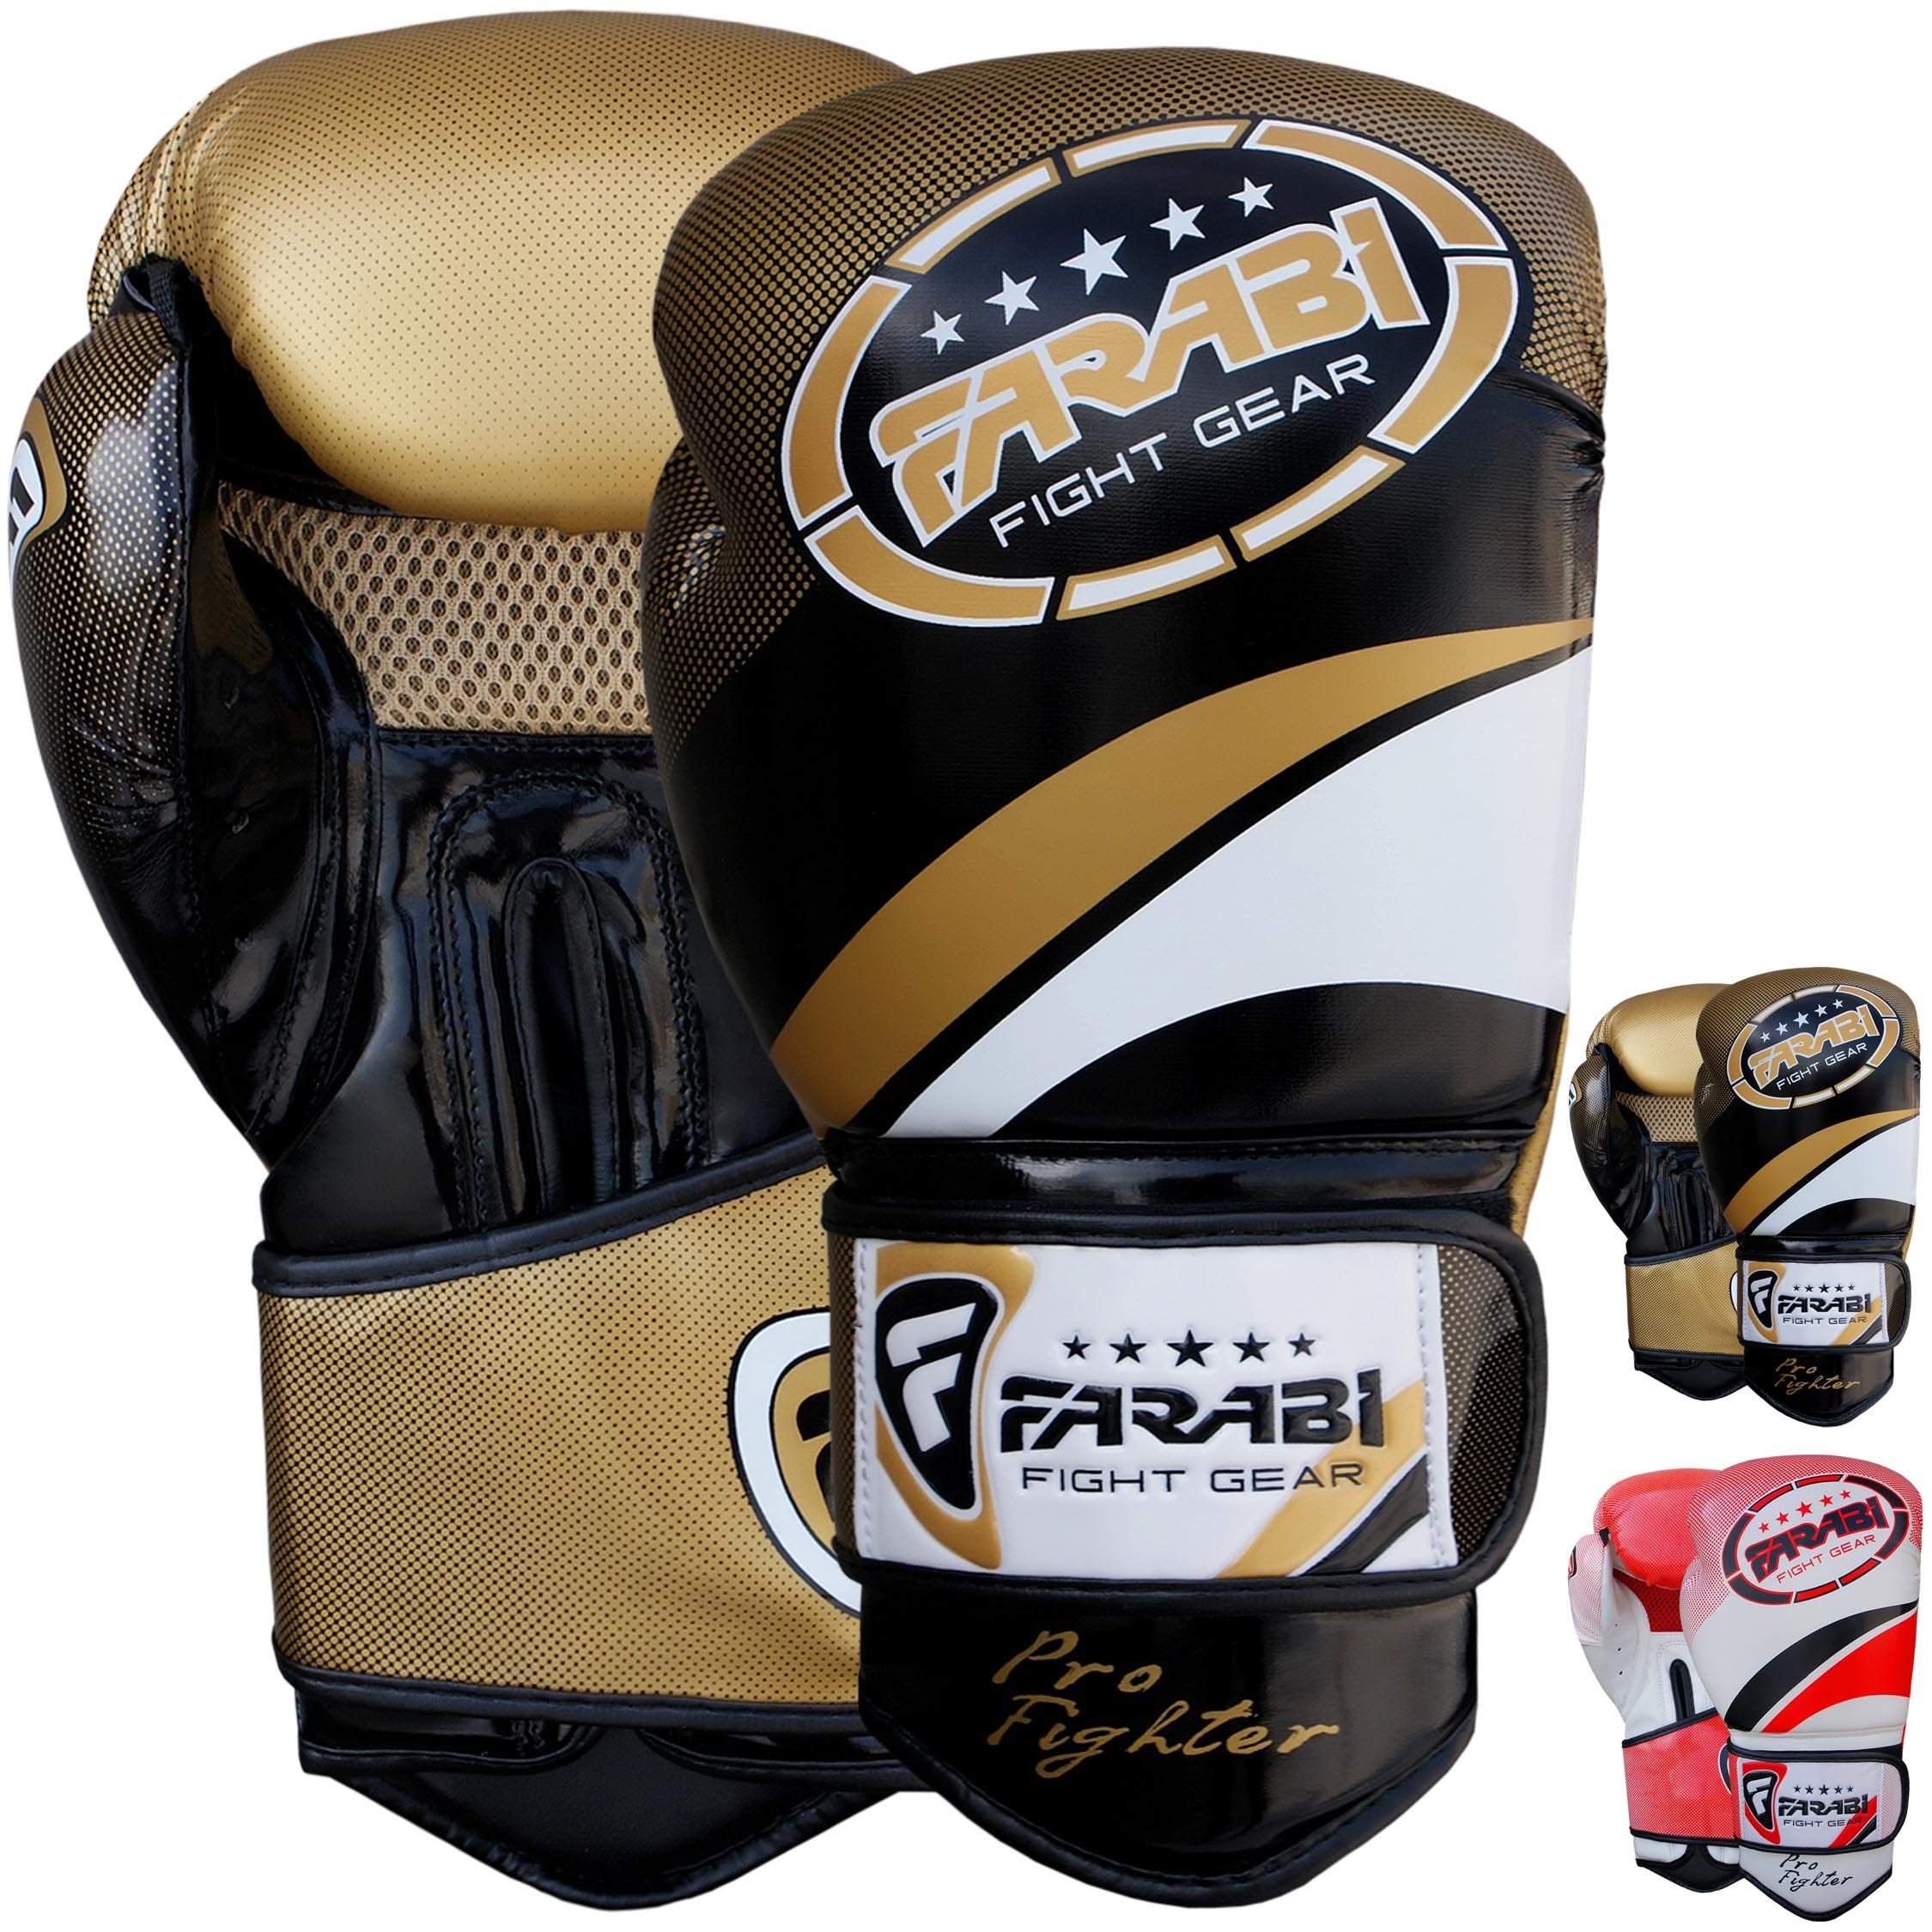 Farabi Boxing Gloves for Training Punching Sparring (Black/Gold, 12-oz)